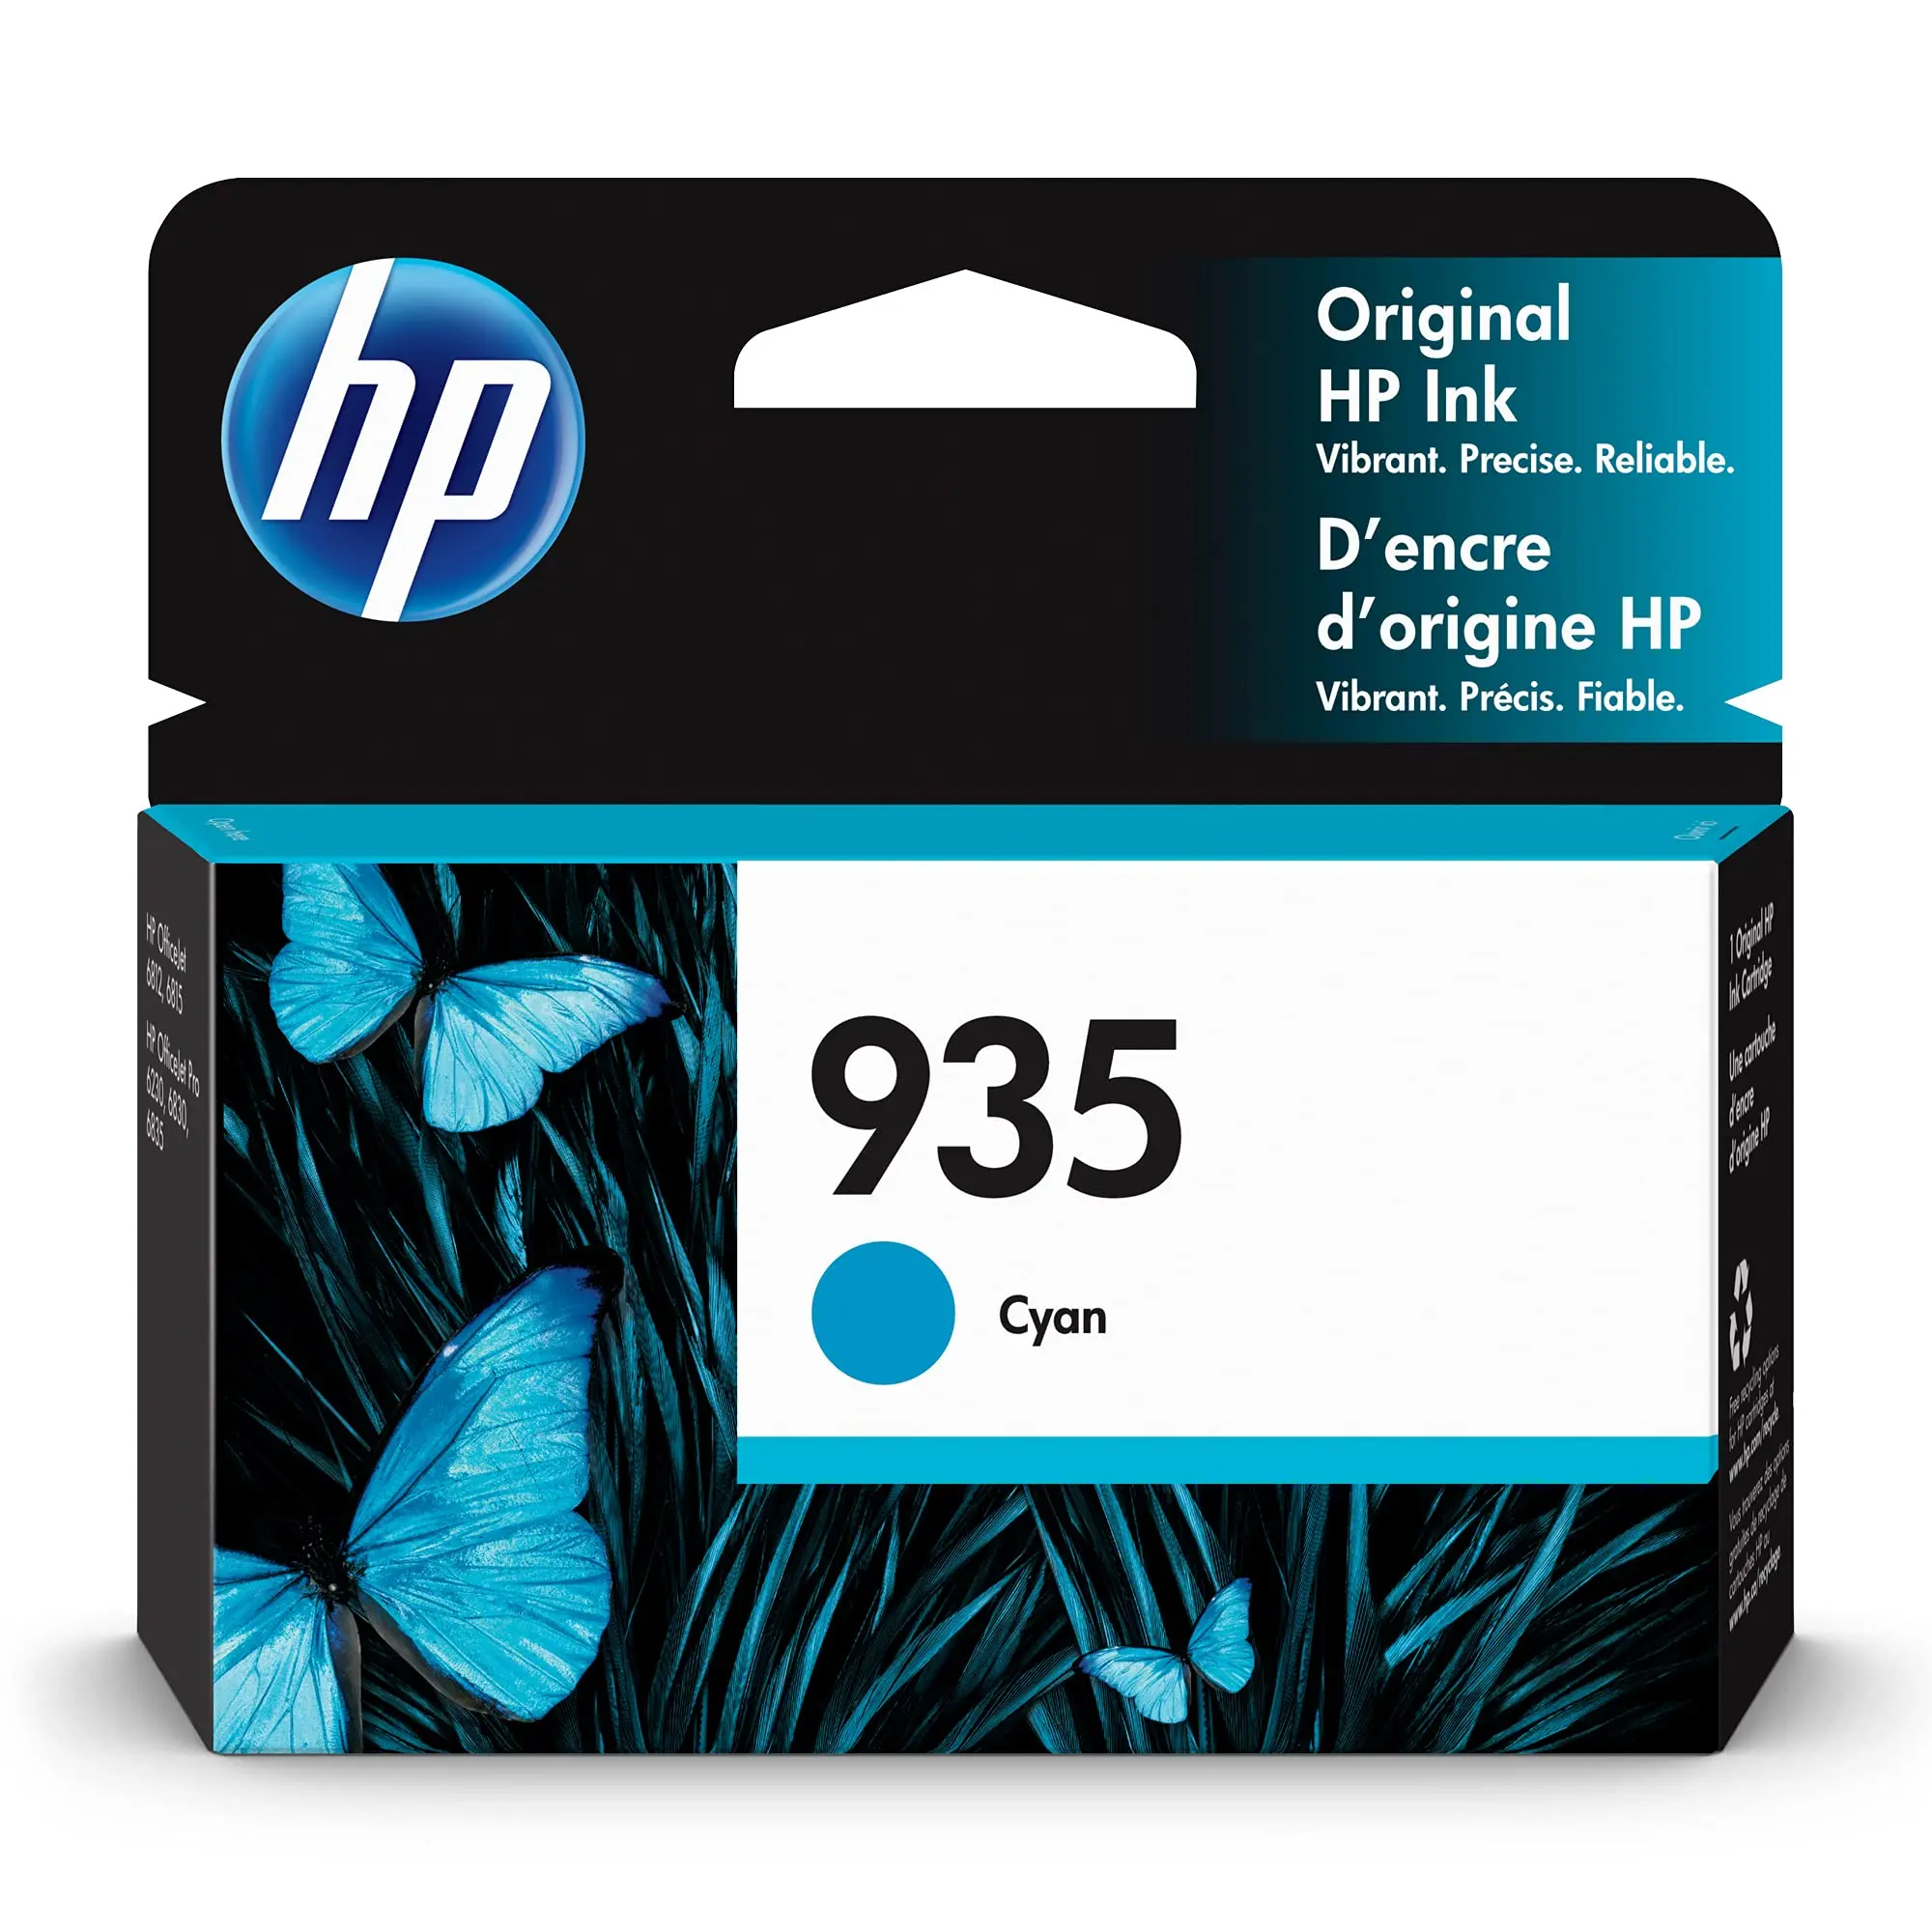 hewlett packard ink cartridge - Do all HP ink cartridges fit all printers